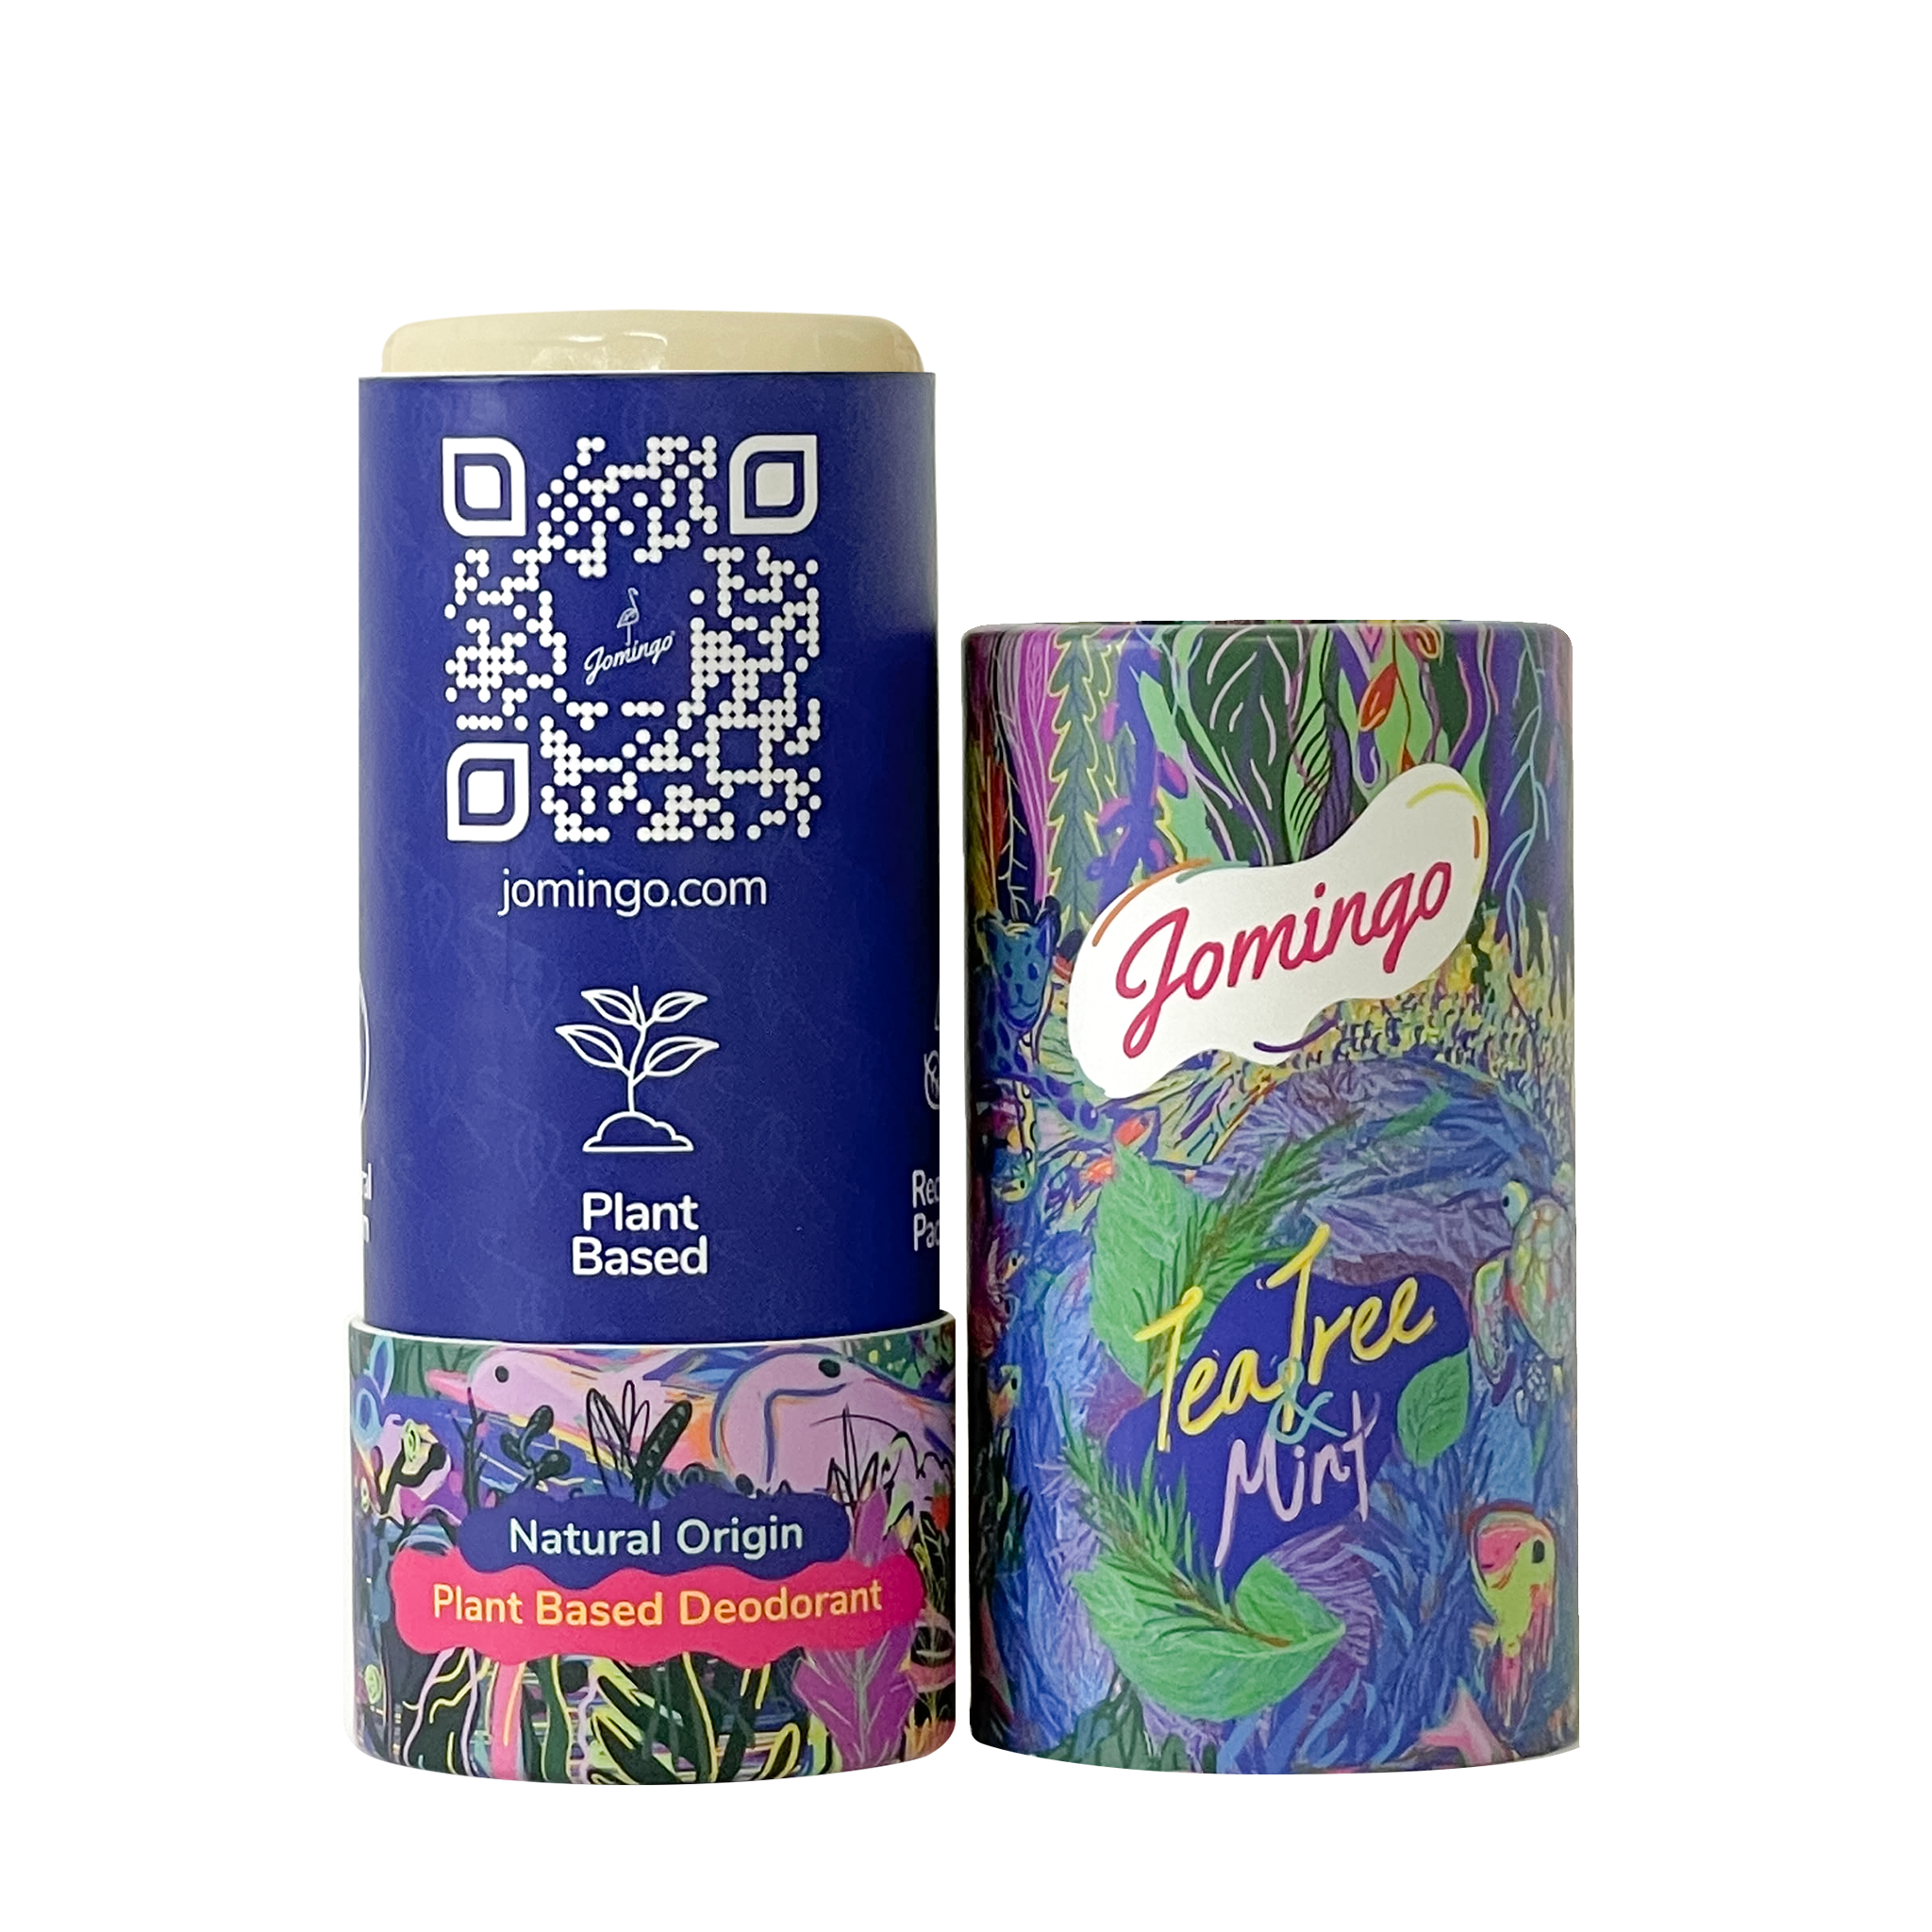 The Best Natural, Aluminium Free Deodorant Gift - Tea Tree Mint Deodorant and Natural Konjac Sponge